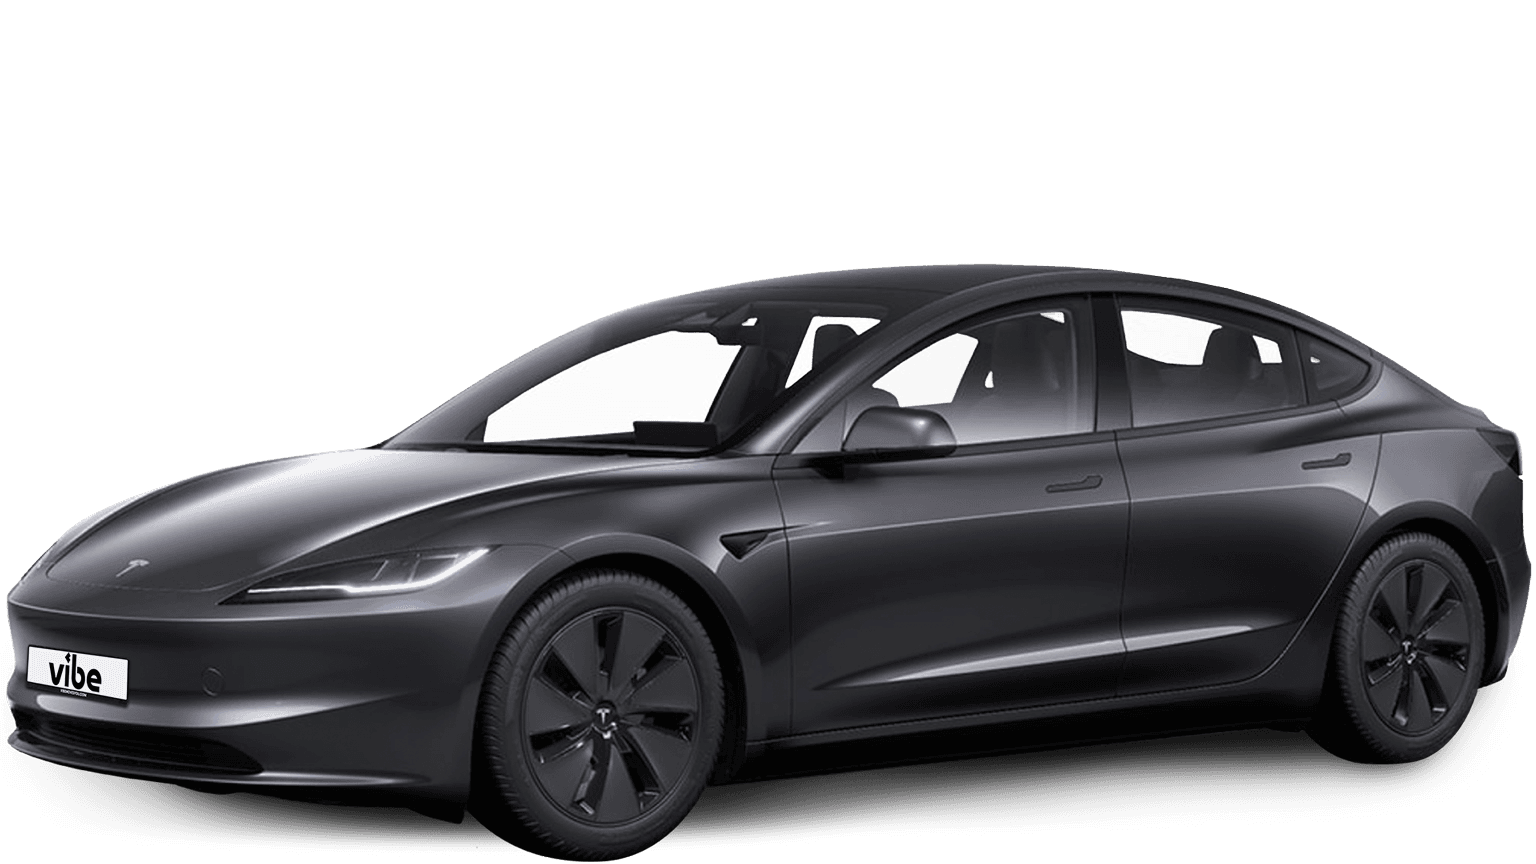 Automodell-Foto: Tesla Model 3 Highland Stealth Grey von vibe